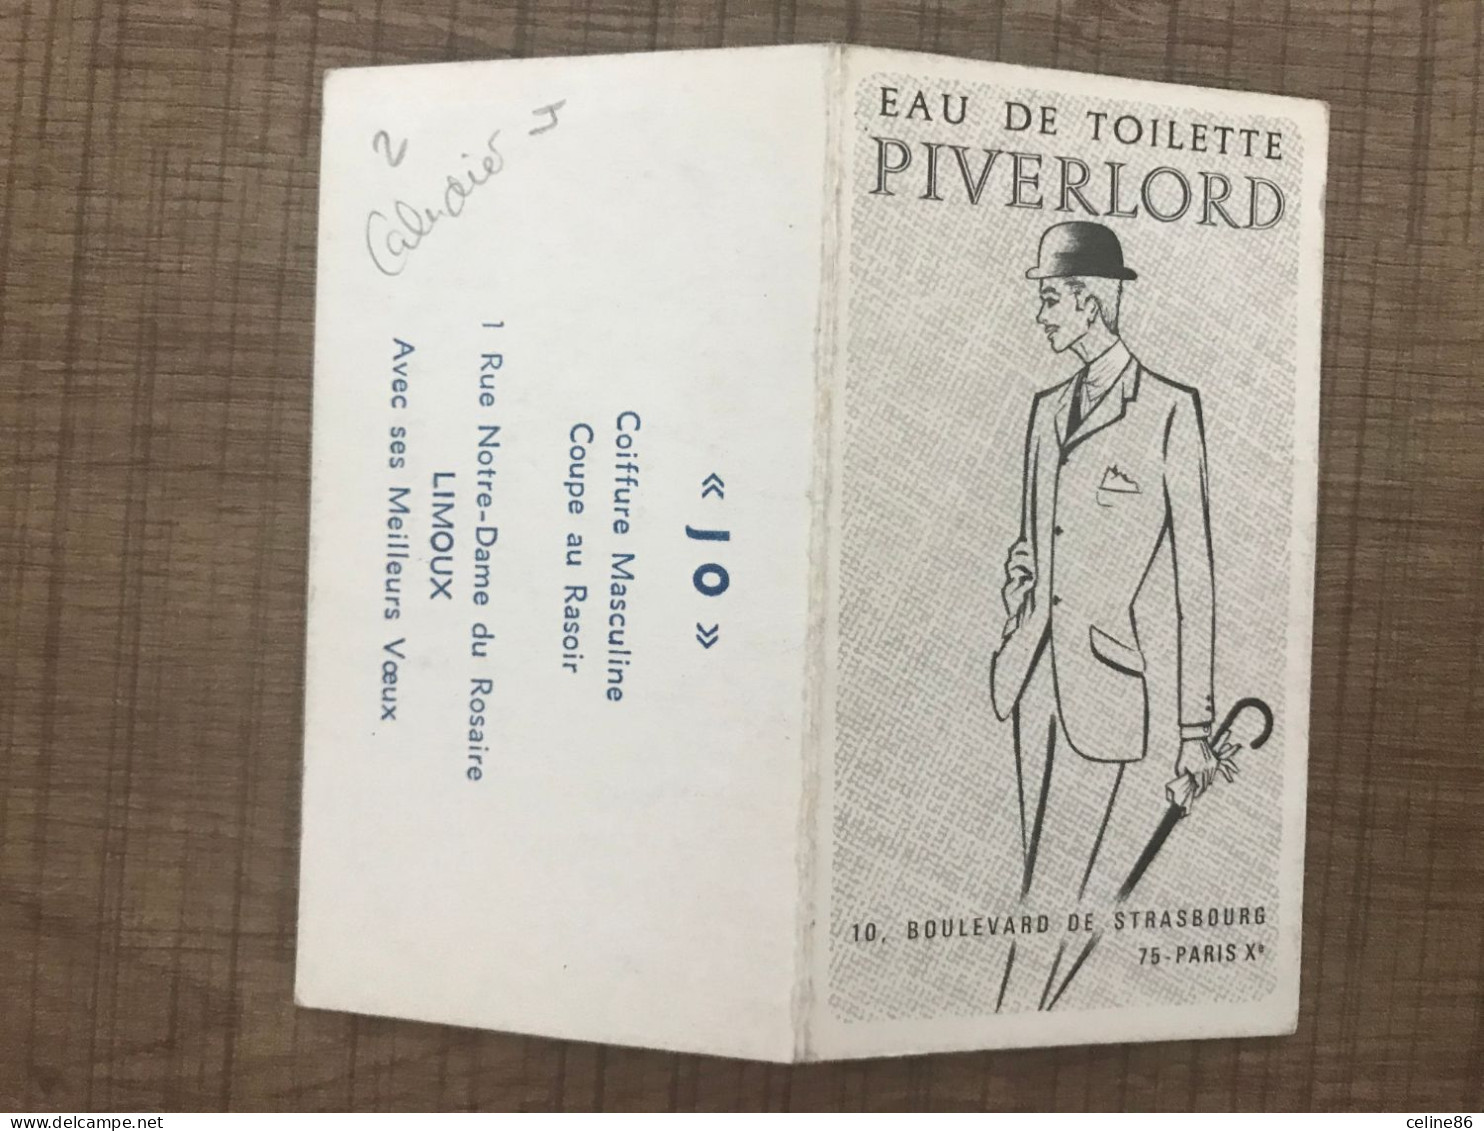 Eau De Toilette PIVERLORD 1969 LIMOUX "JO" Coiffure Masculine - Small : 1961-70